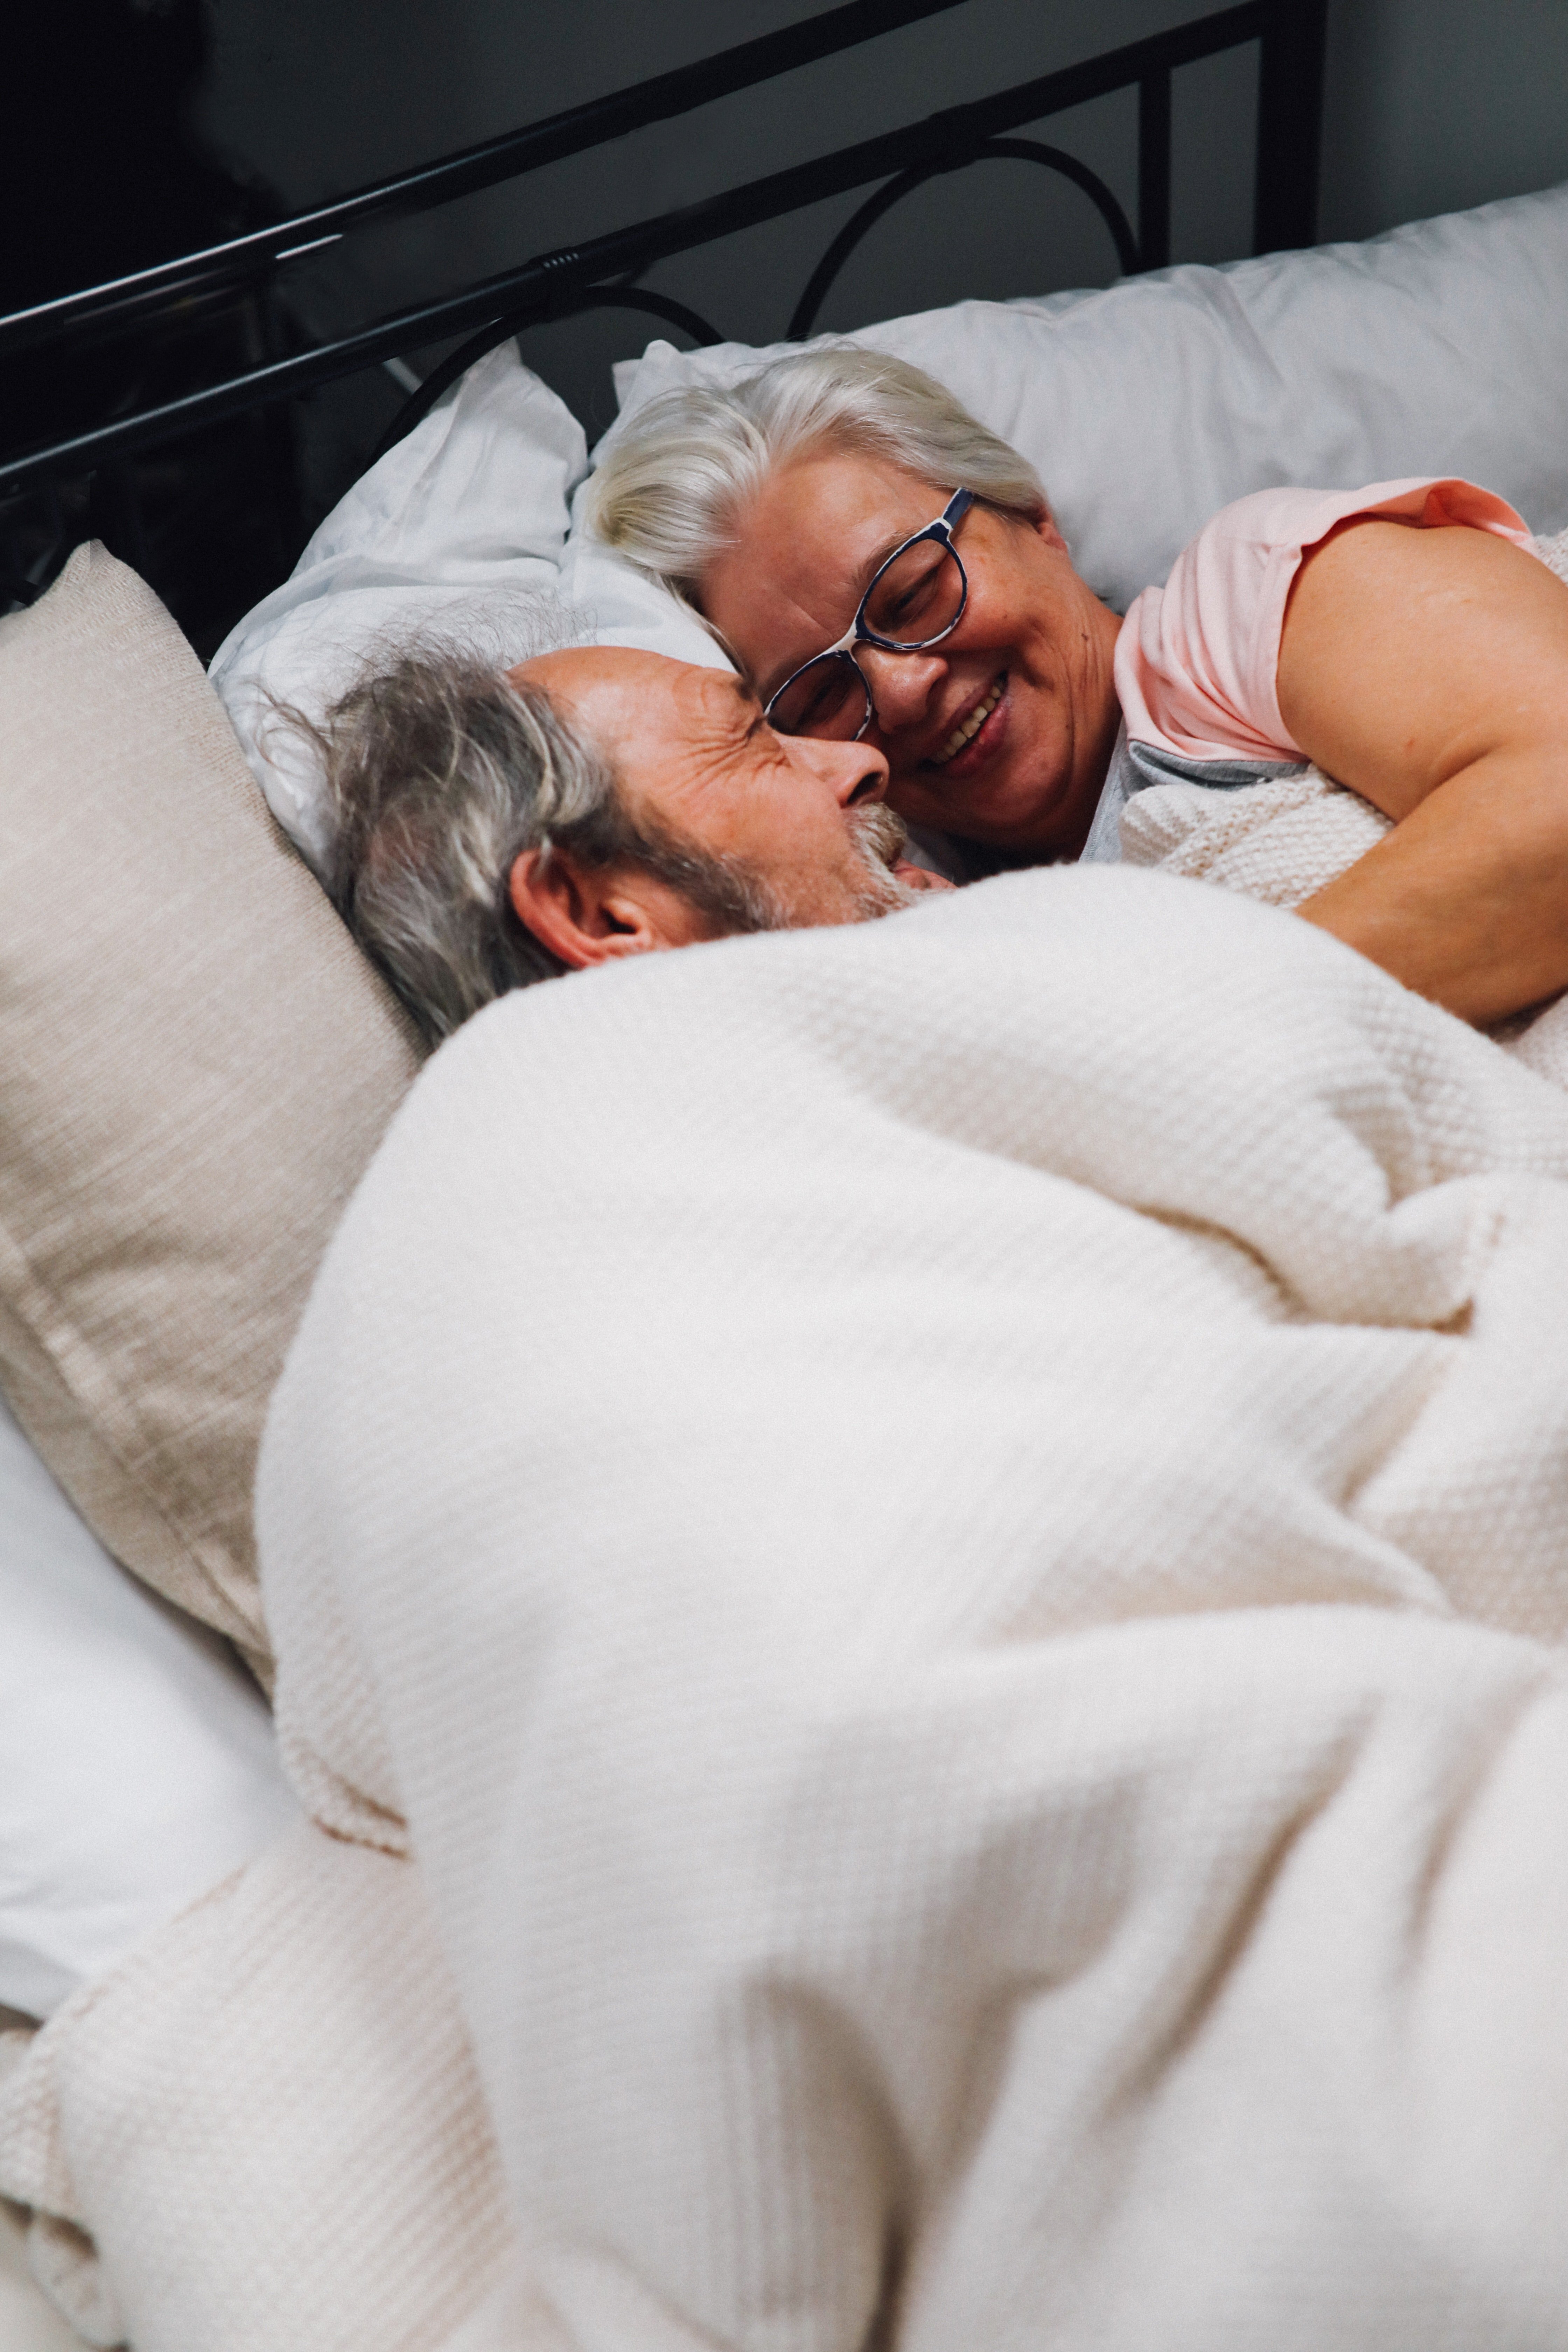 An elderly couple couddling in bed. Source: Pexels/ Tom Leishman